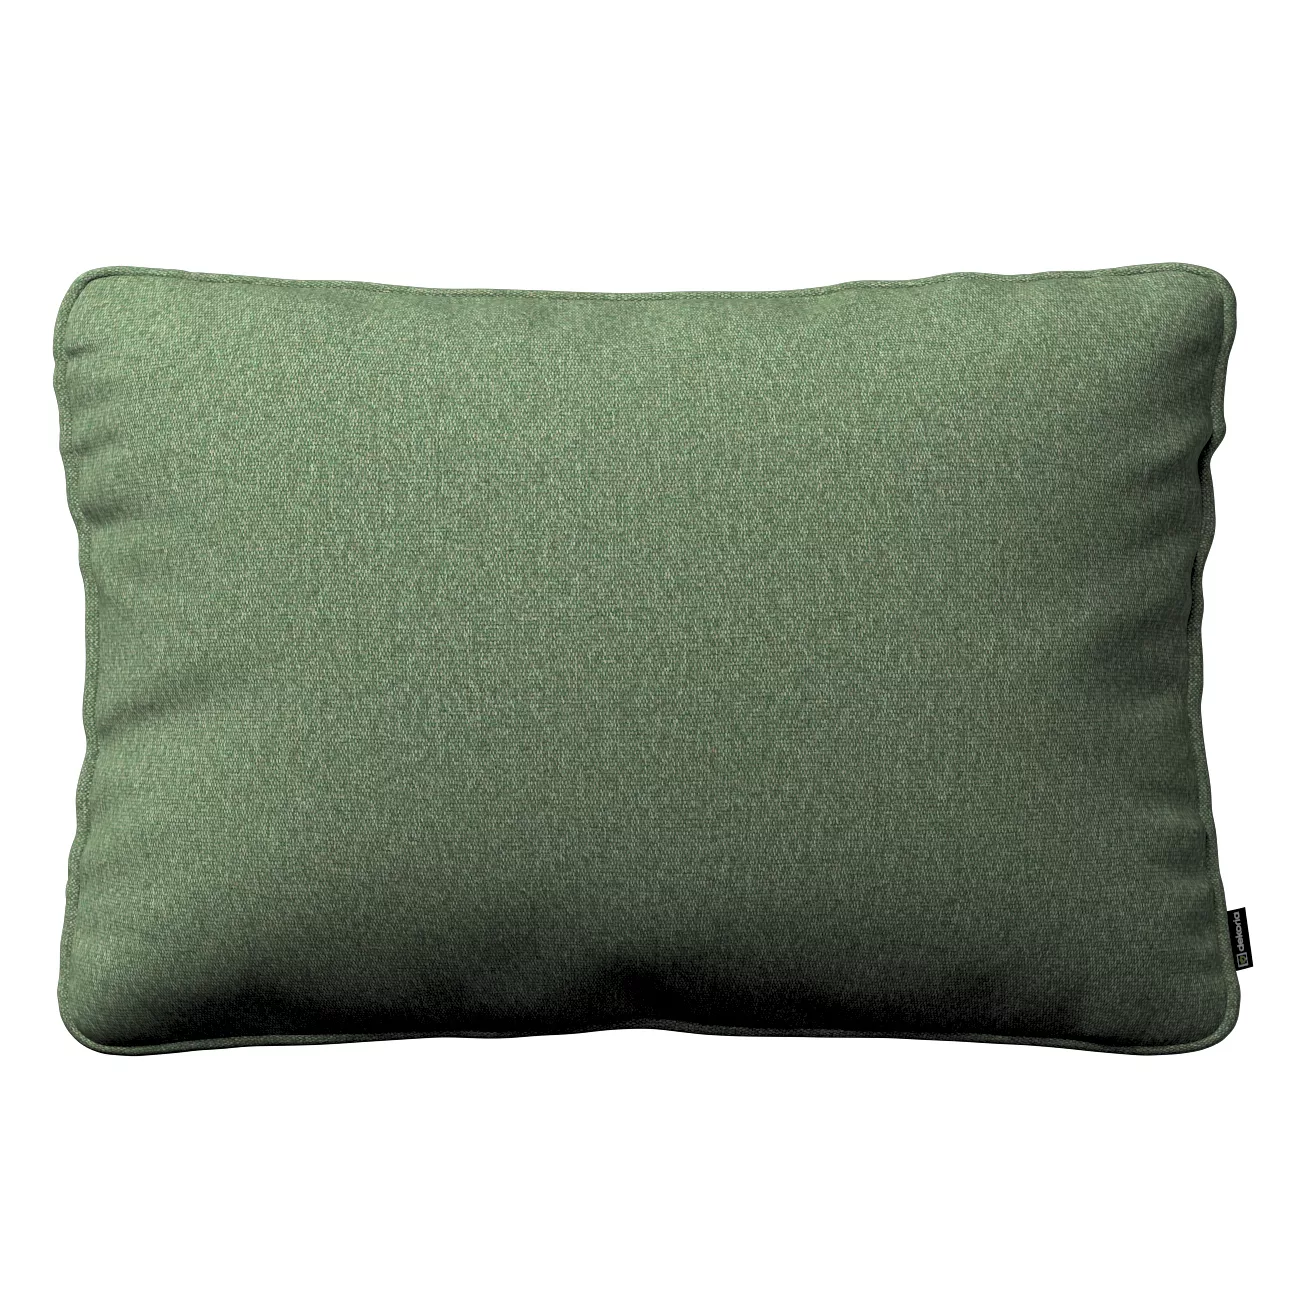 Kissenhülle Gabi mit Paspel 60x40cm, grün, 60 x 40 cm, Amsterdam (704-44) günstig online kaufen